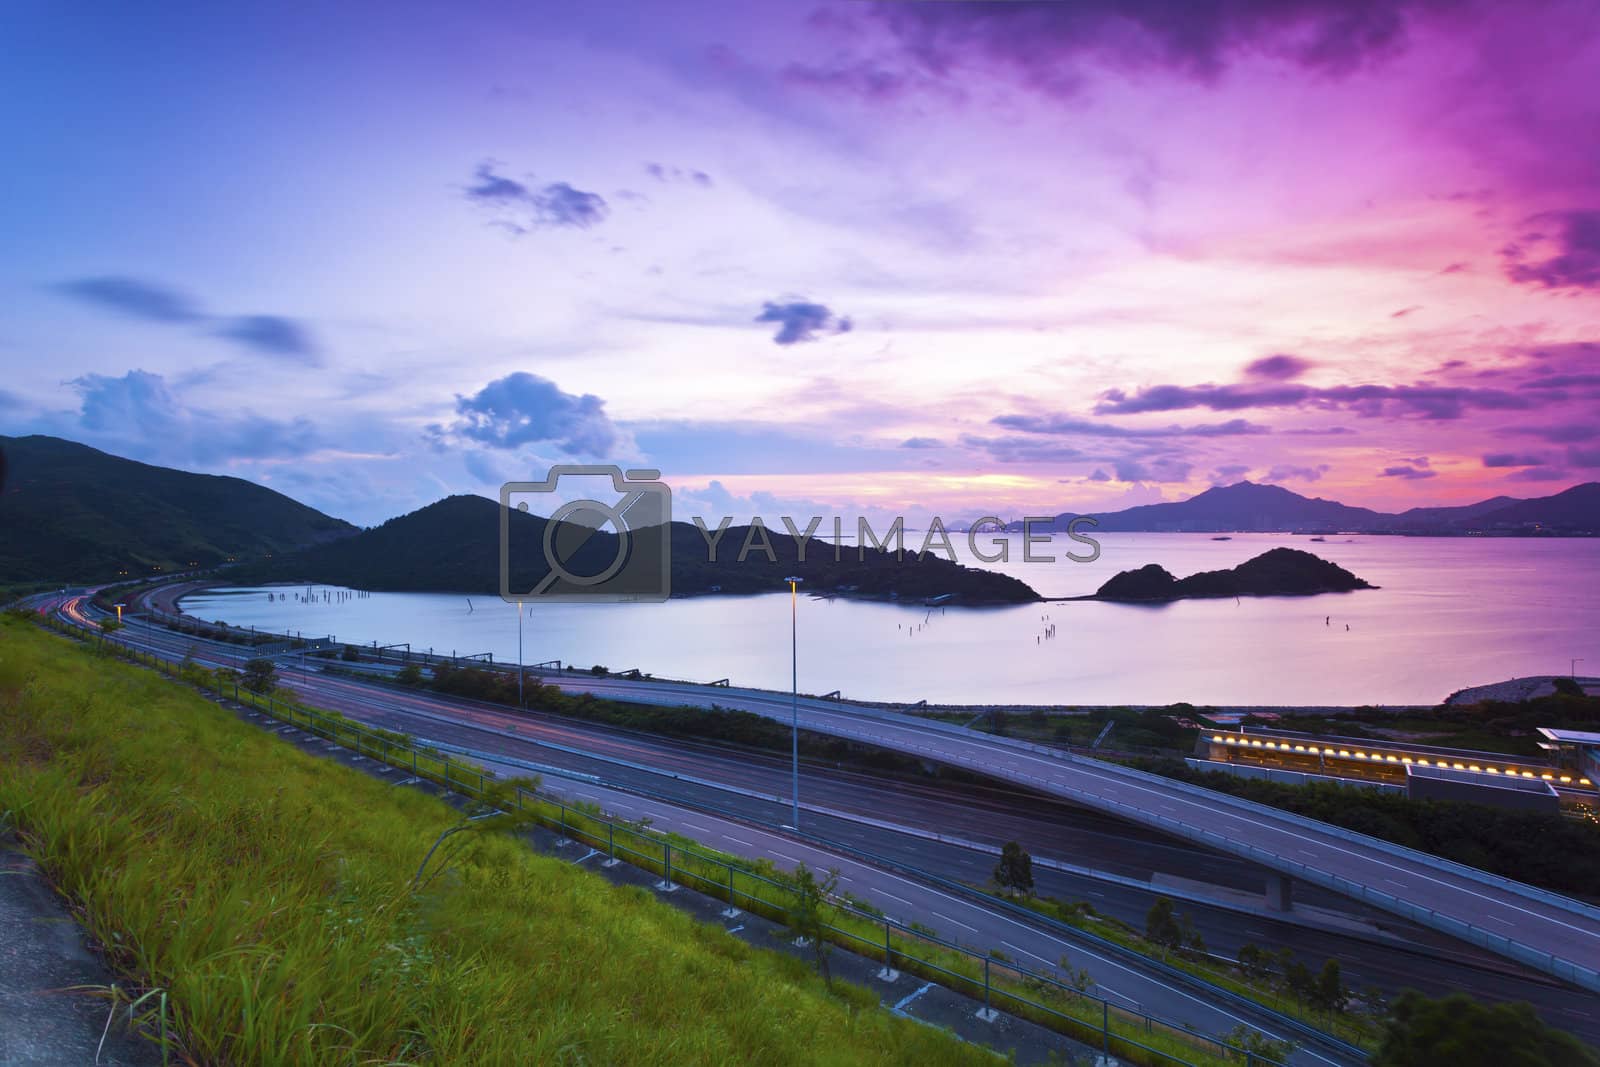 Royalty free image of Traffic highway in Hong Kong at sunset by kawing921